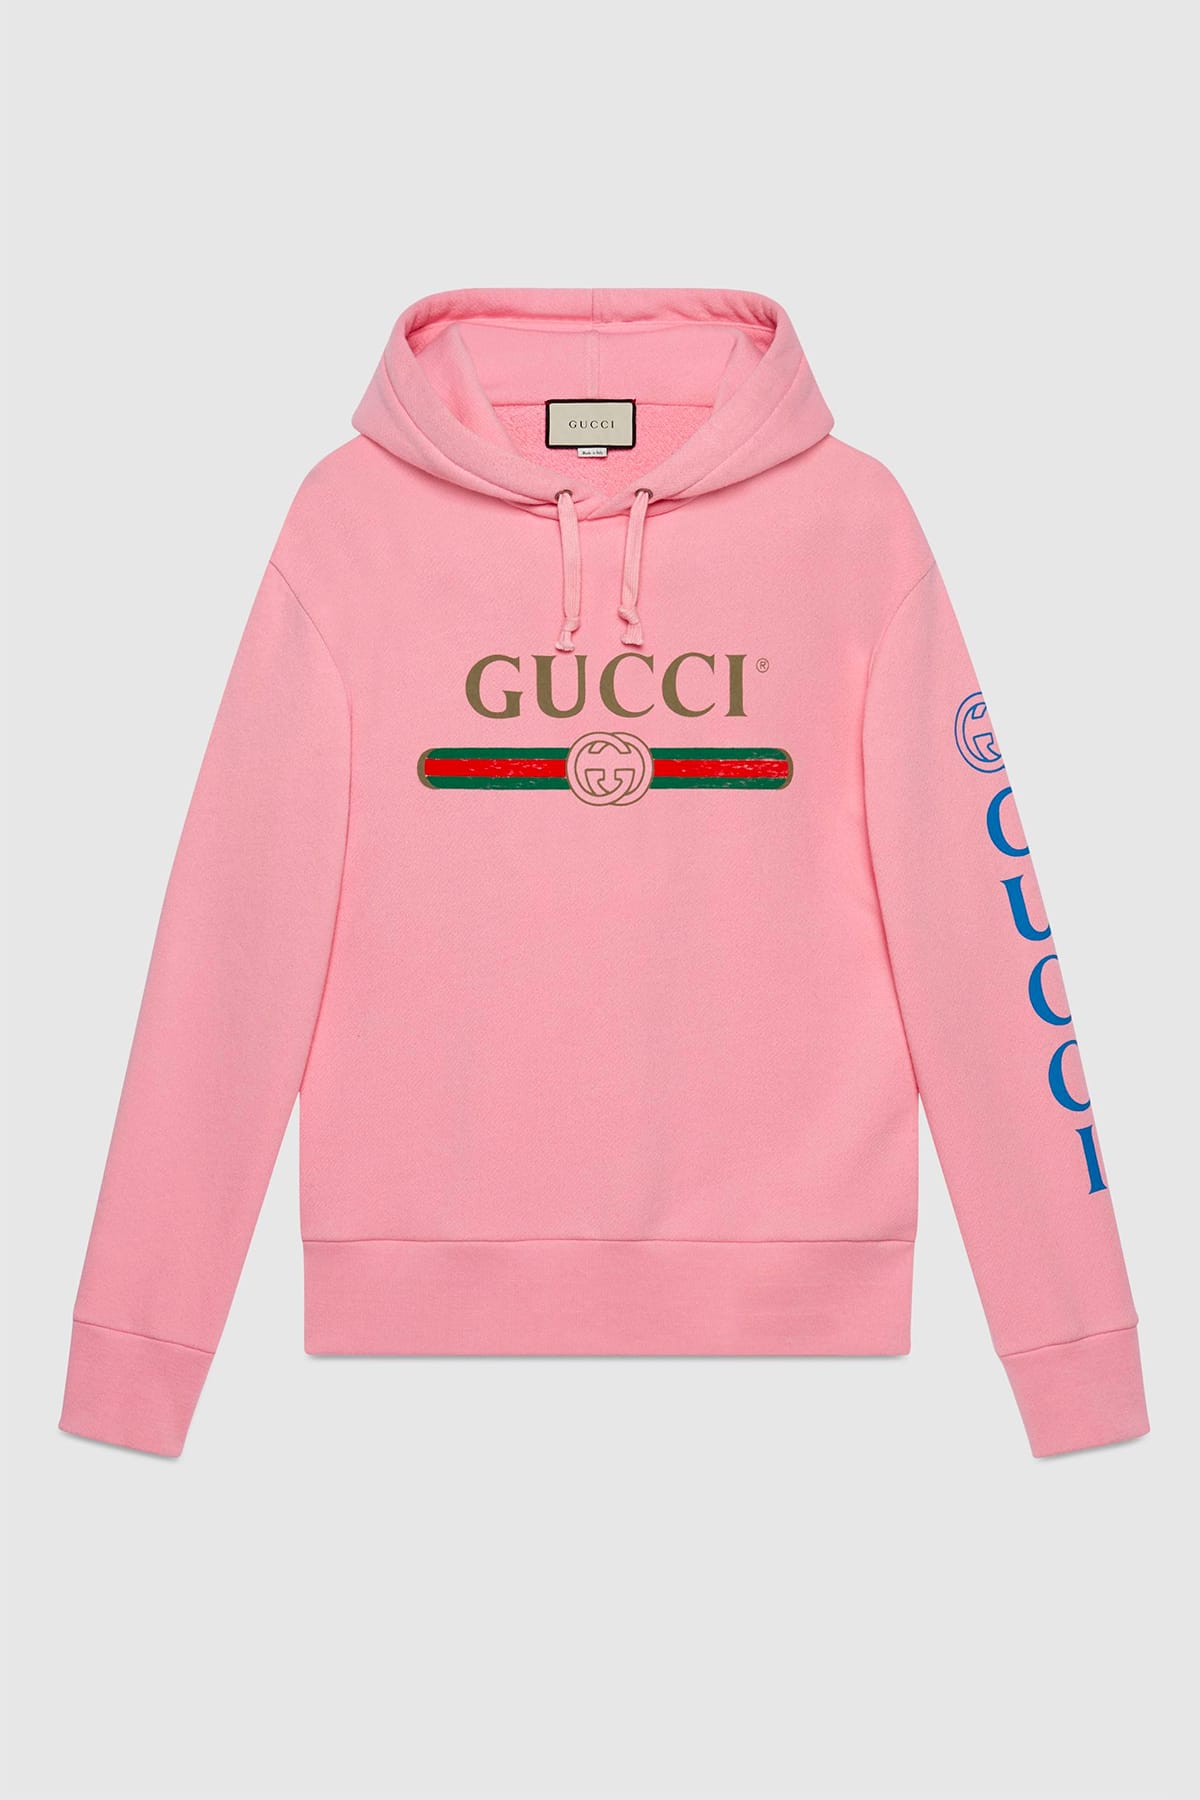 Gucci Pink Vintage Logo Hoodie with 